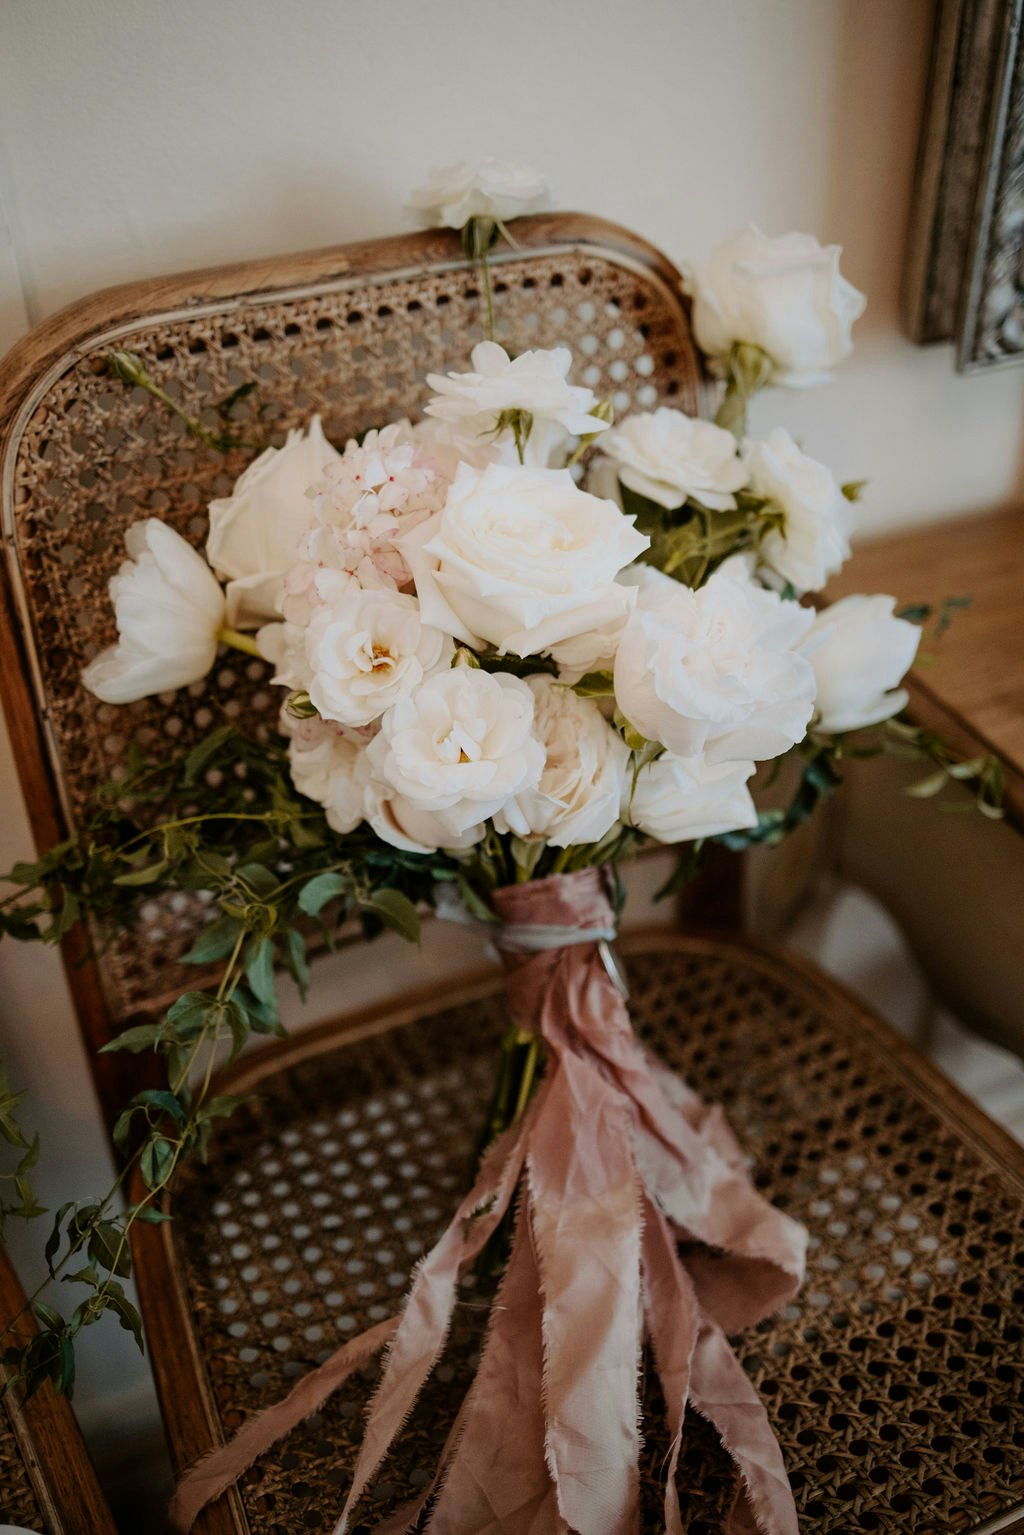 Wedding bouquet sitting on a chair